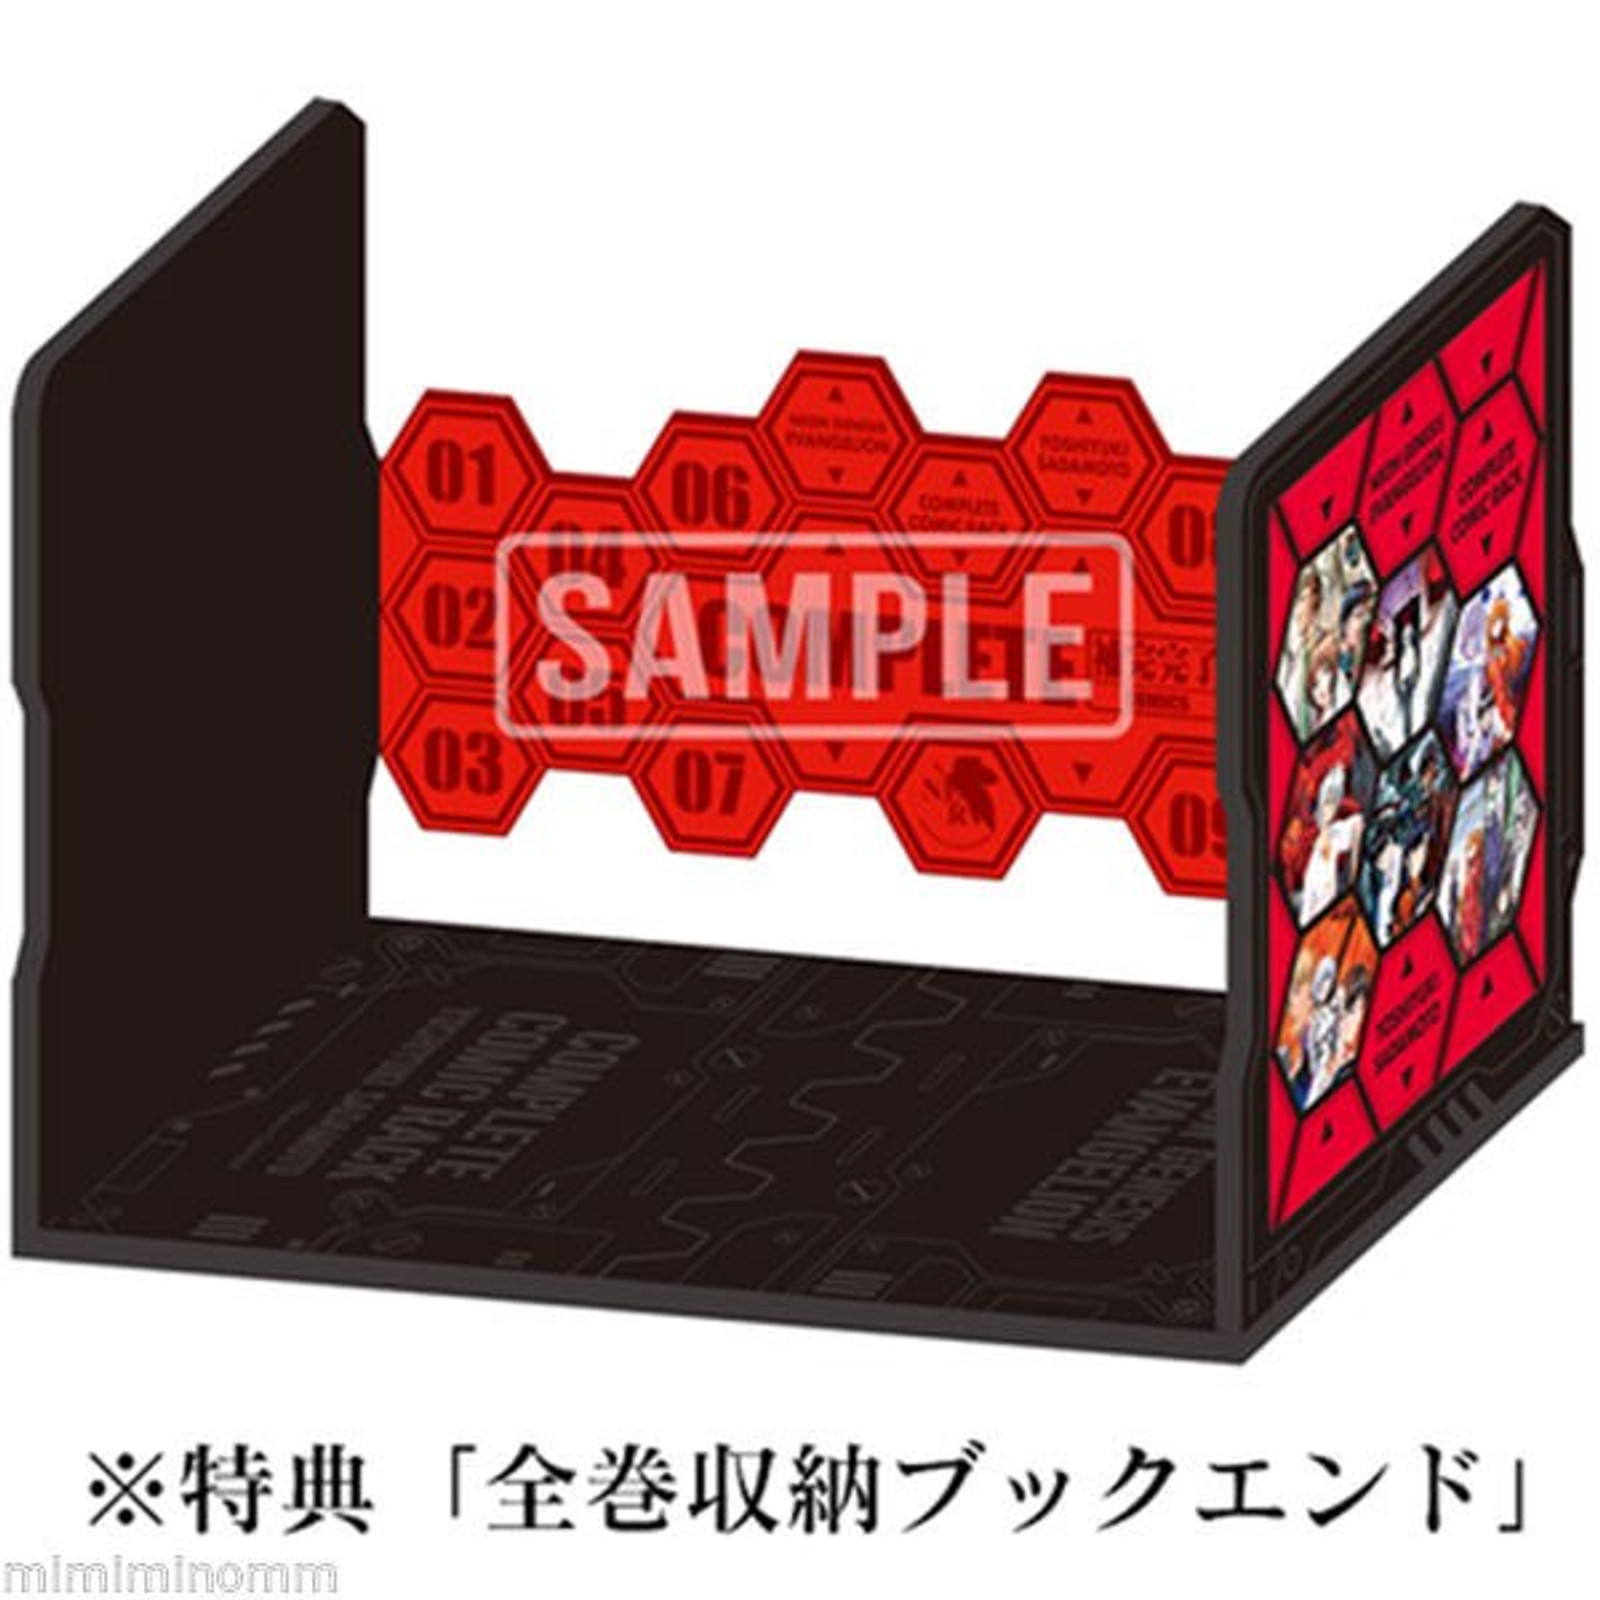 Evangelion Comics Vol.14 Premium Limited Edition (Comics+Bookend+Booklet+CD)